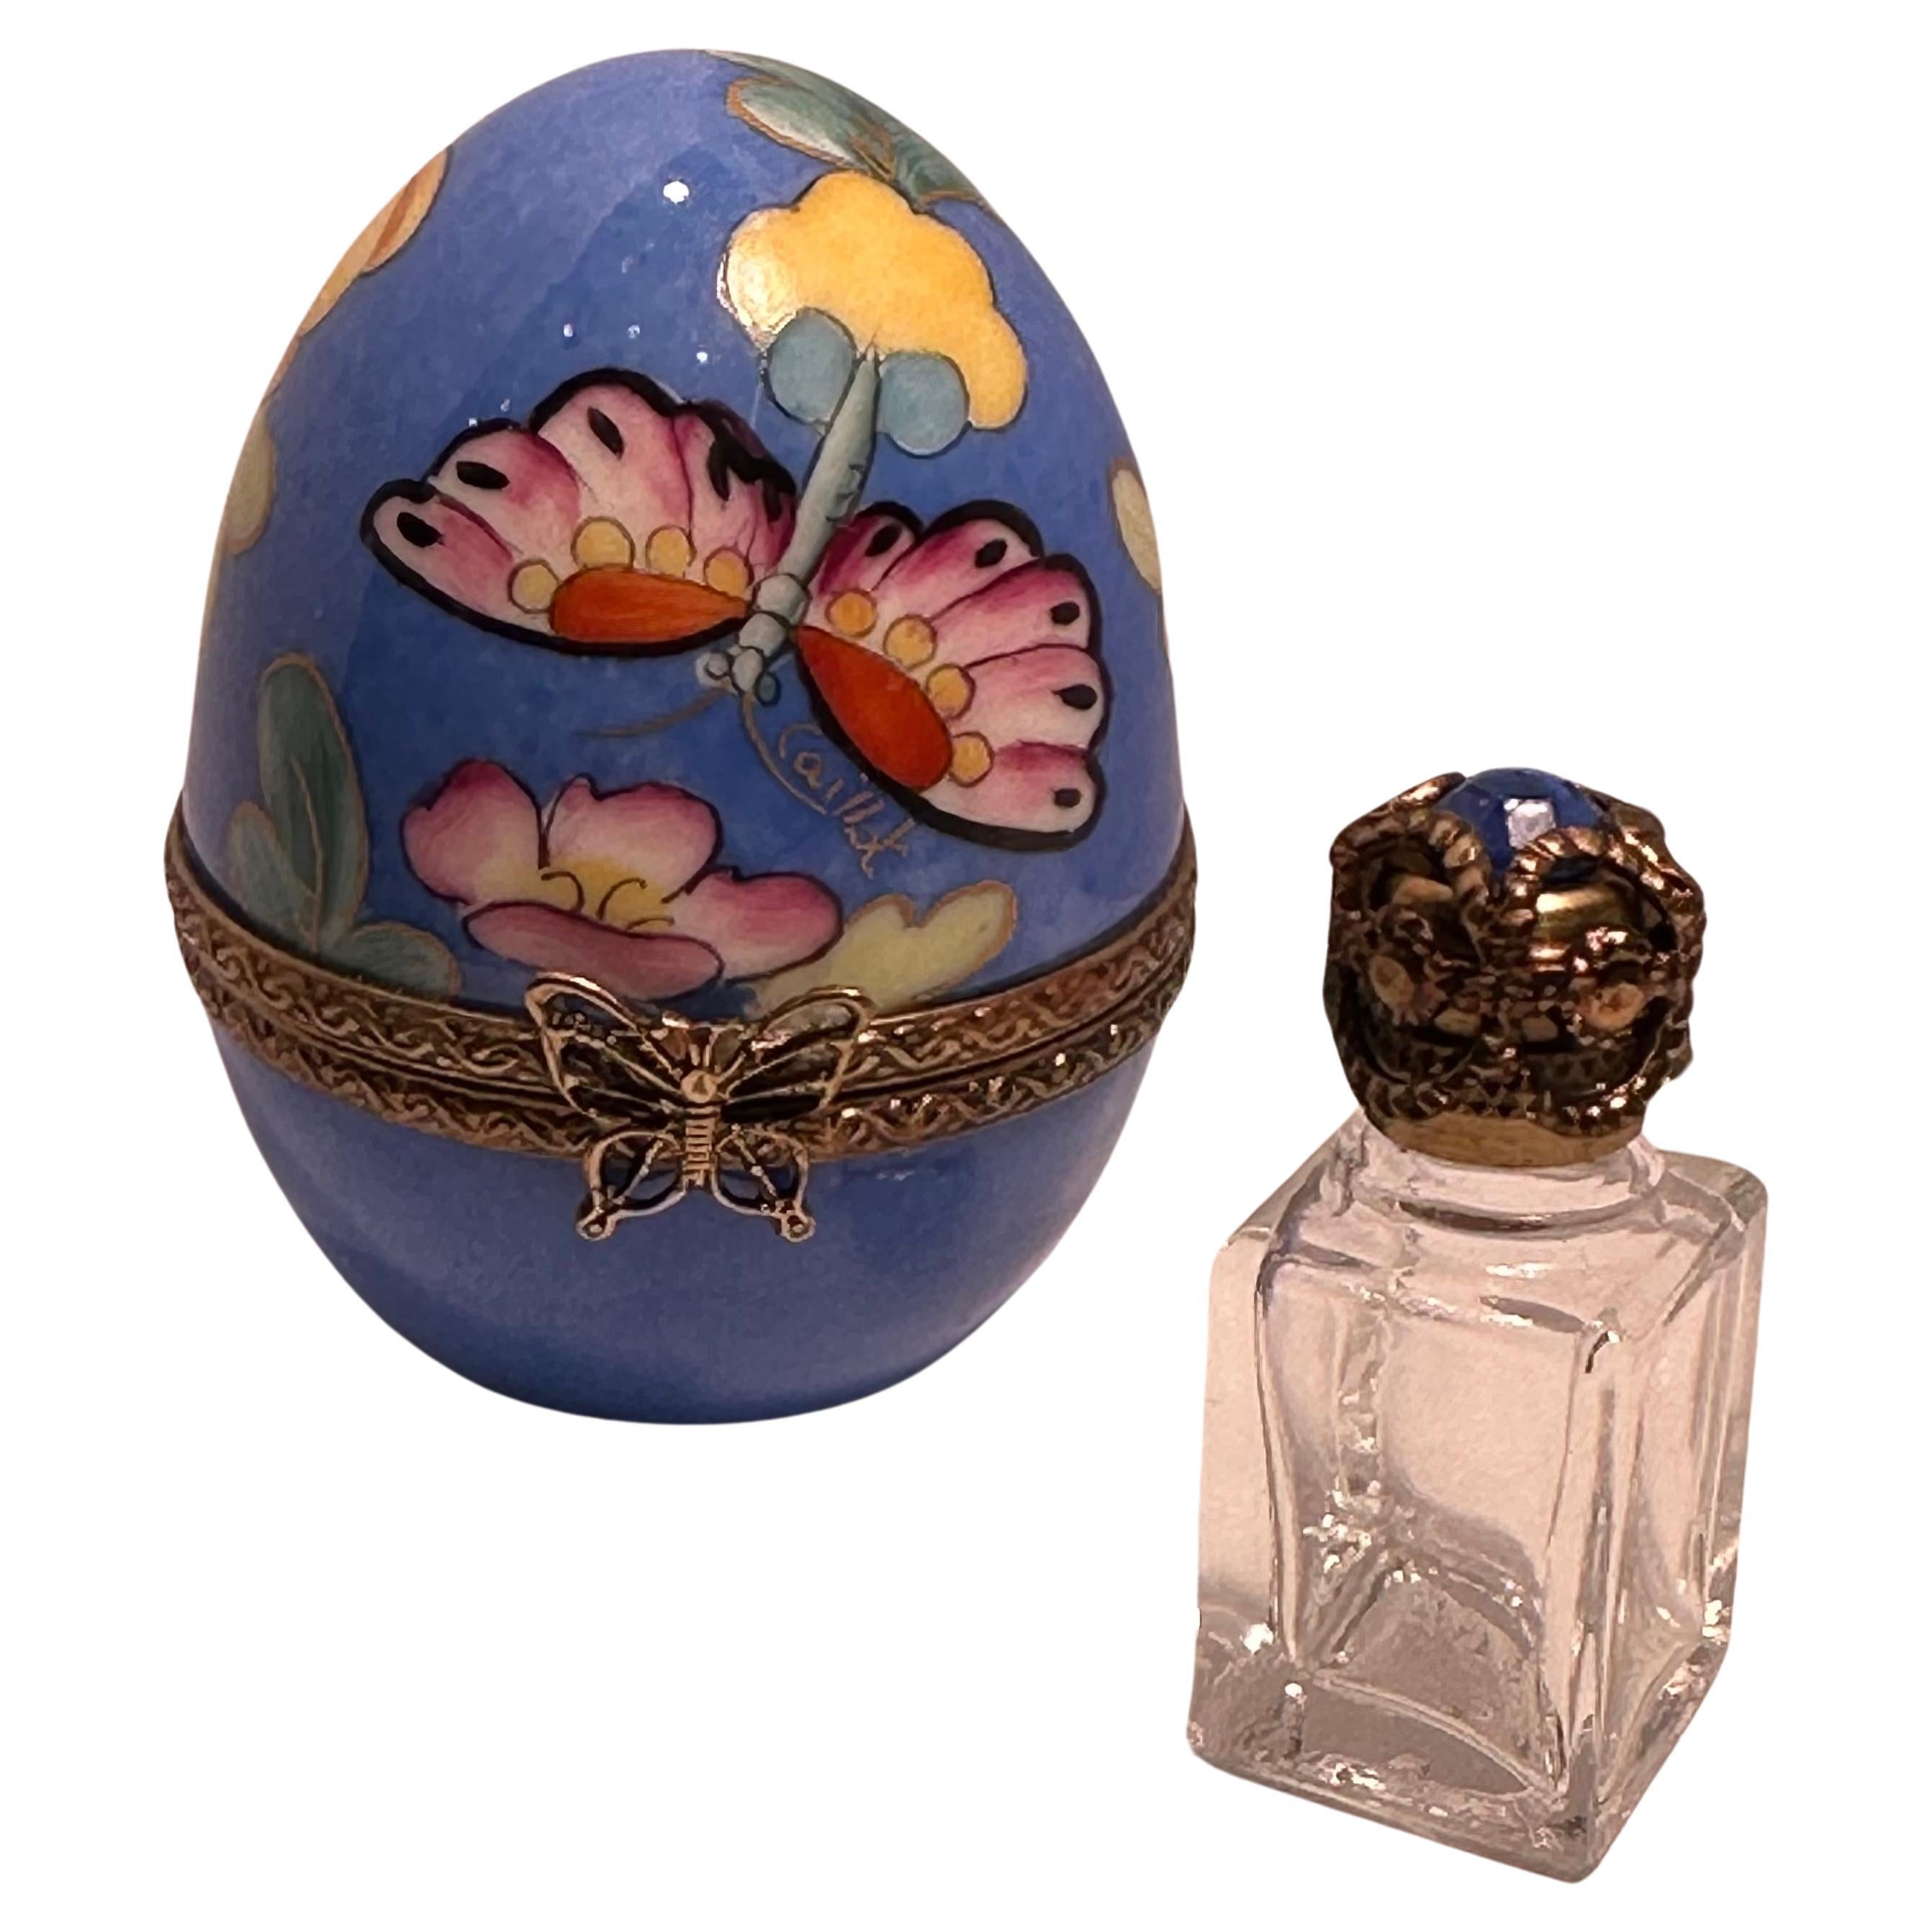 Exquisite Limoges France Polychrome Porcelain Egg with Perfume Bottle Inside For Sale